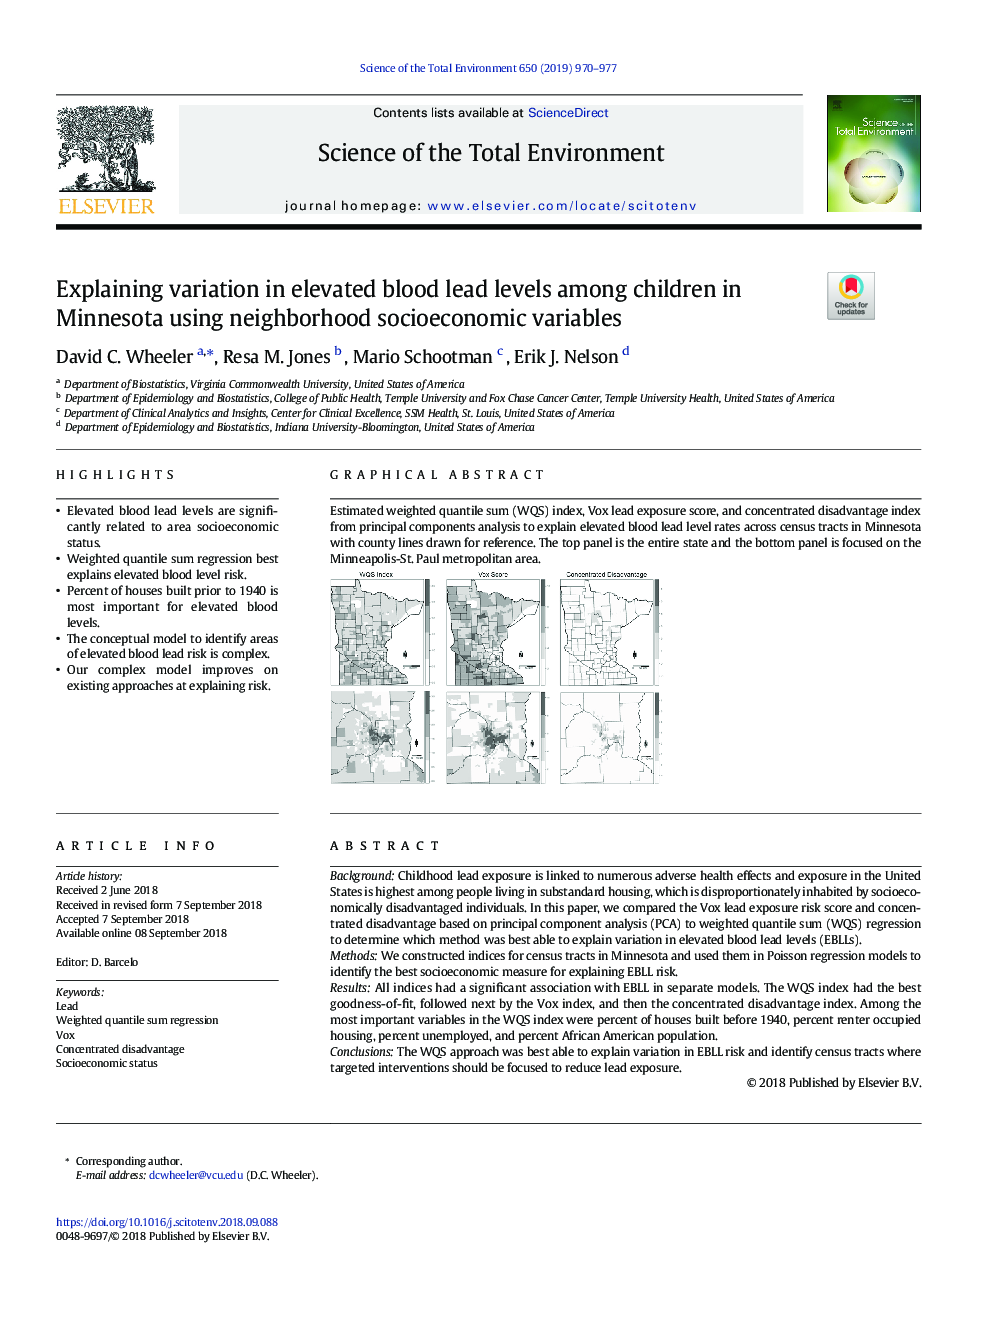 Explaining variation in elevated blood lead levels among children in Minnesota using neighborhood socioeconomic variables